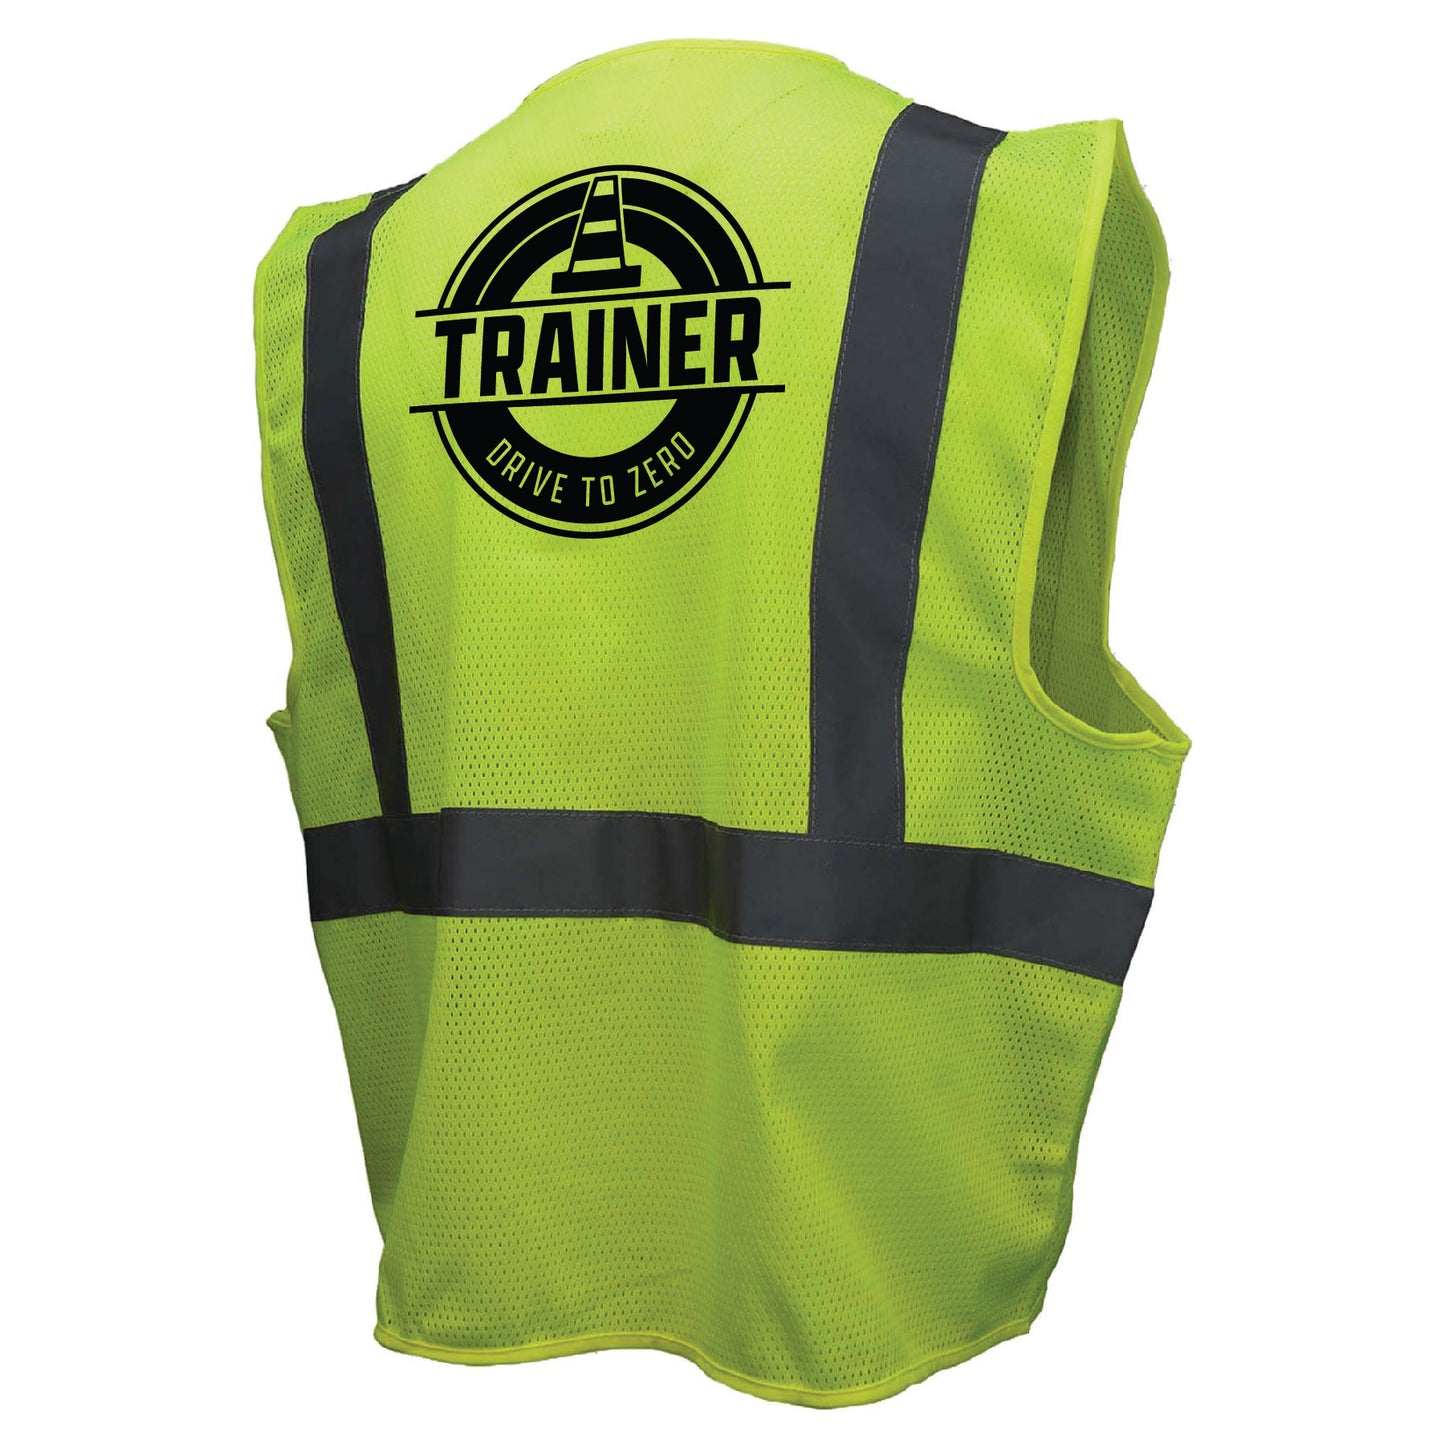 Safety Trainer Economy Mesh Safety Vest with Zipper, ANSI 2, R